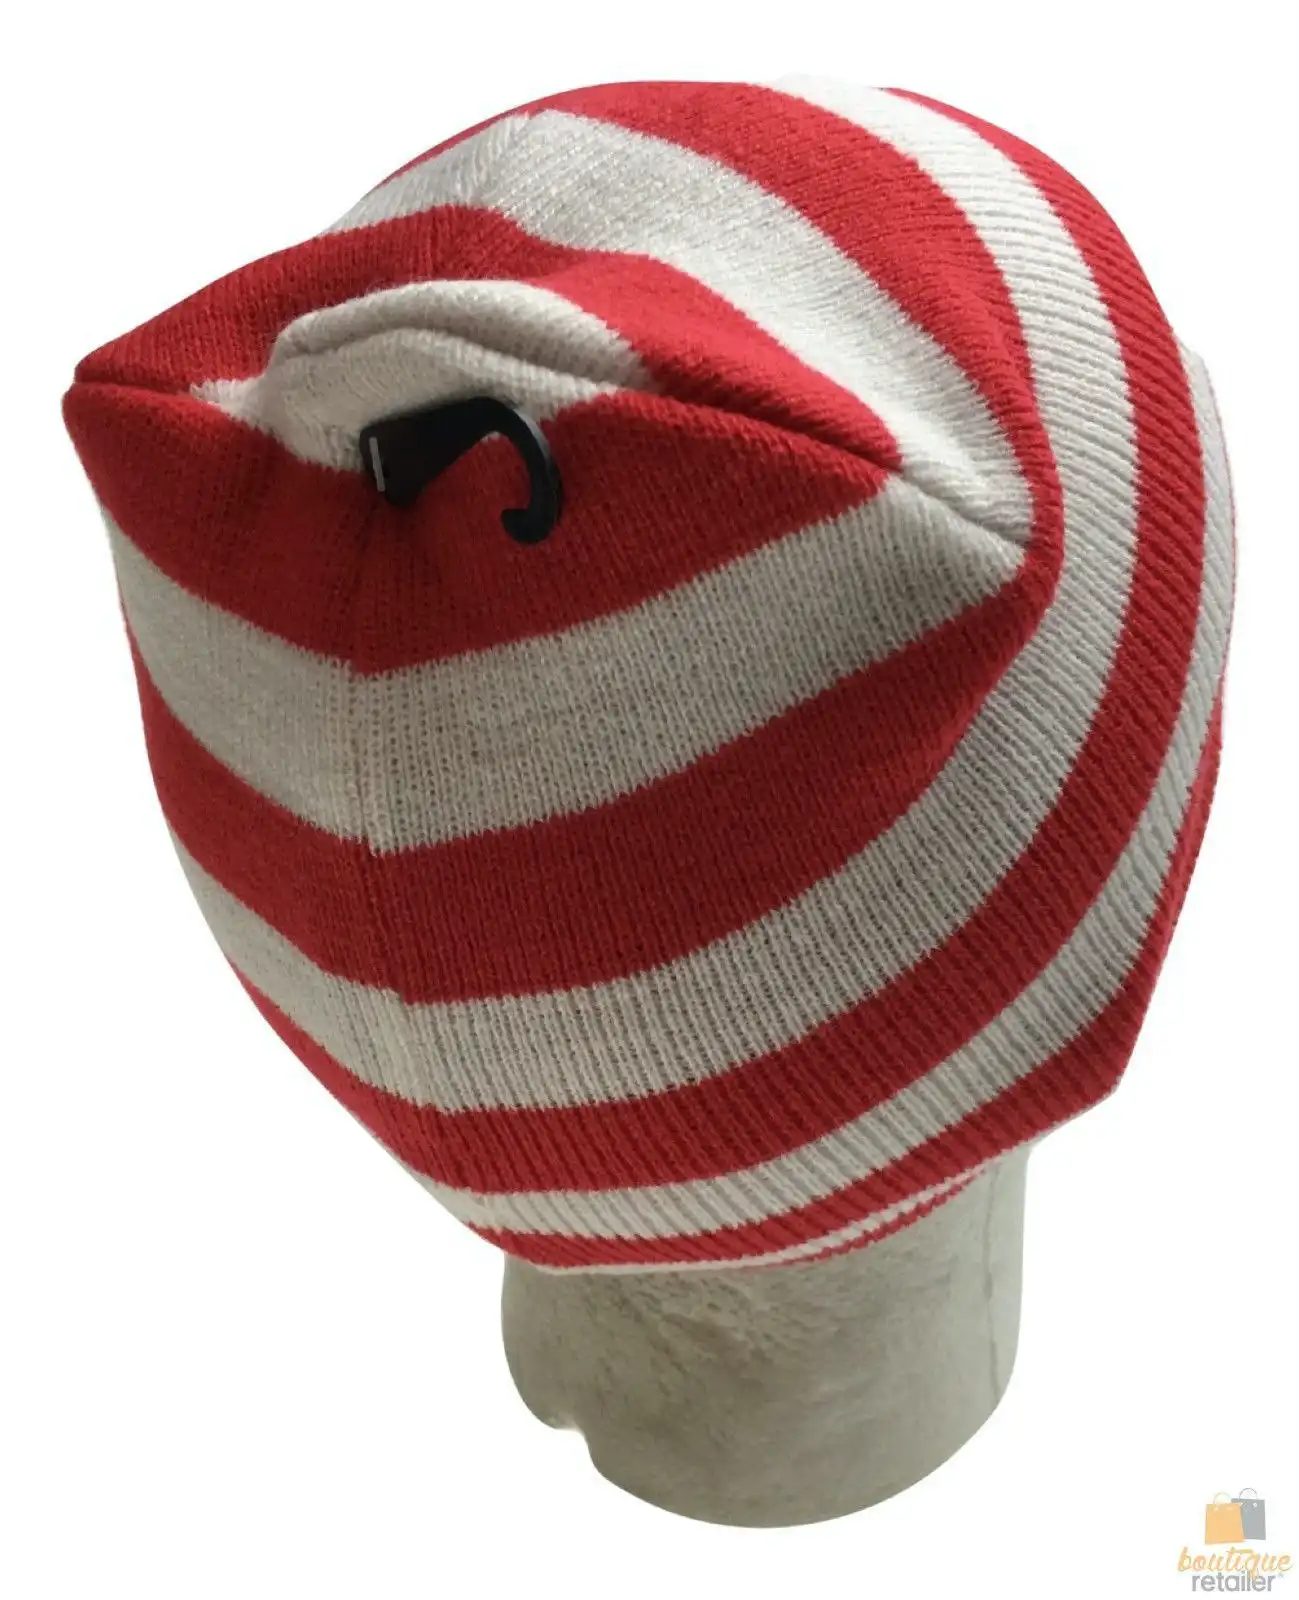 Red White Stripe Beanie Hat Costume Dress Up Knitted Ski Winter Cap New